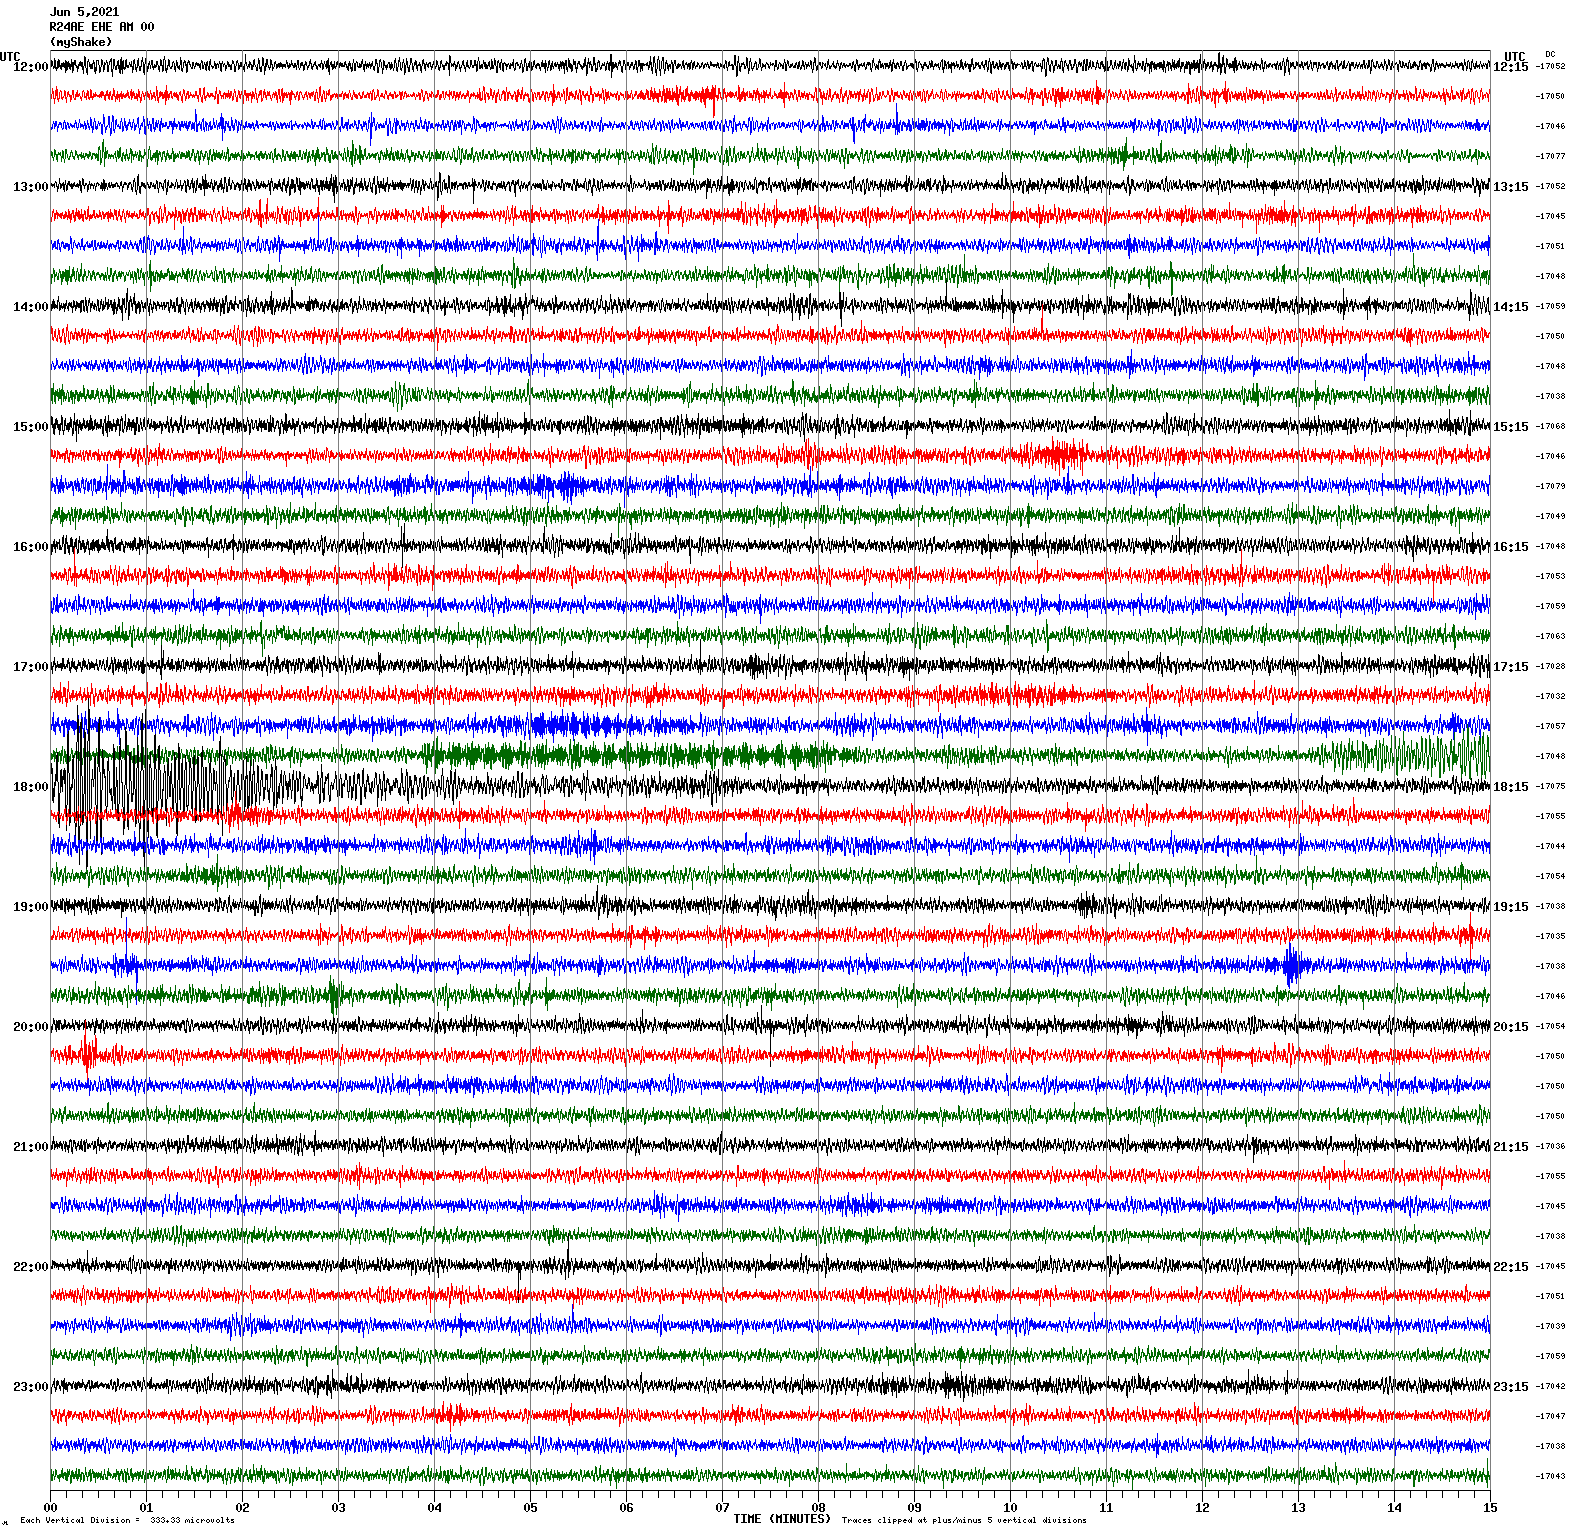 /seismic-data/R24AE/R24AE_EHE_AM_00.2021060512.gif